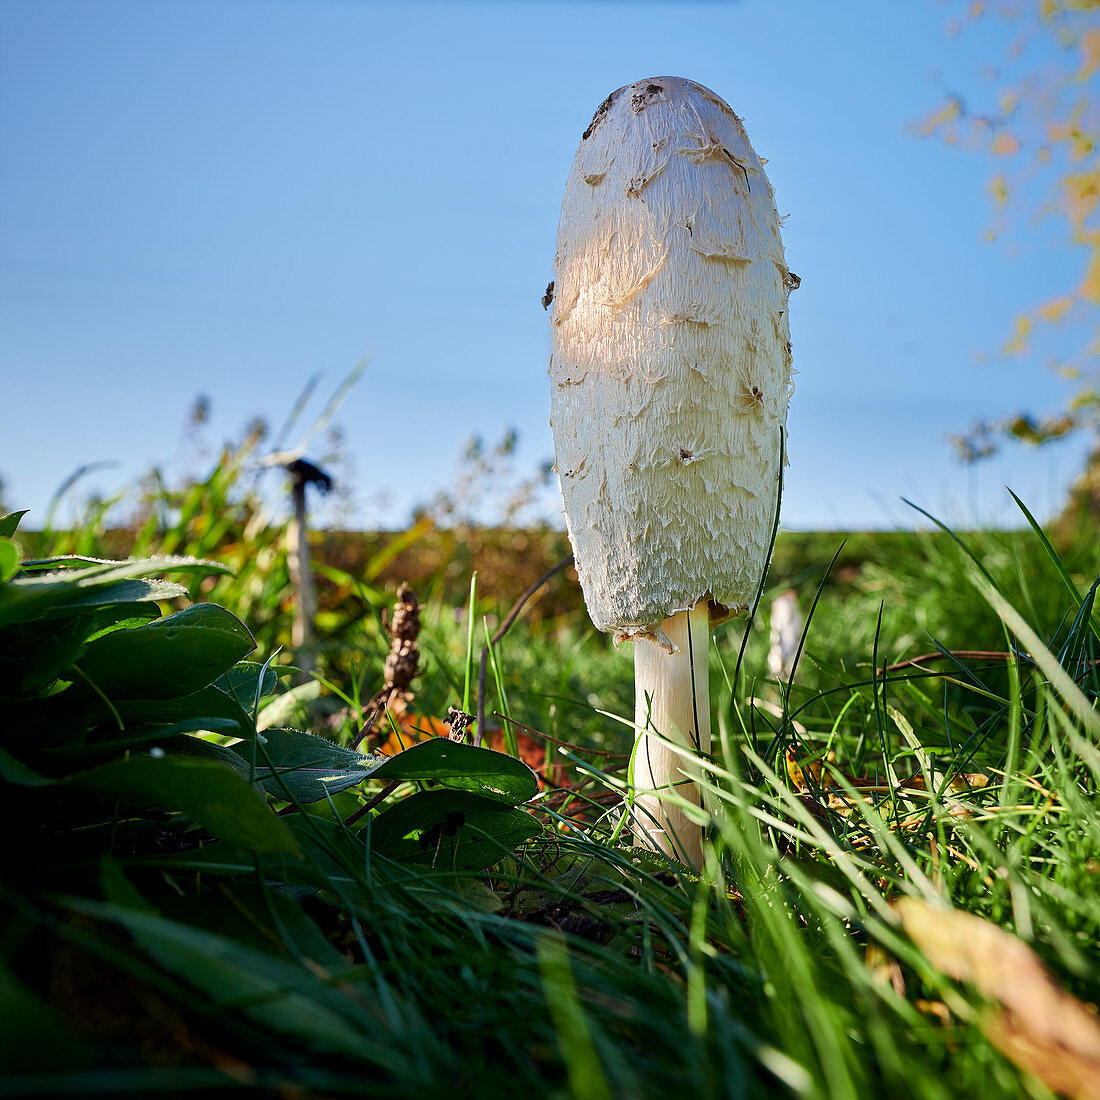 Mushroom in the sunlight, Unkel, Germany